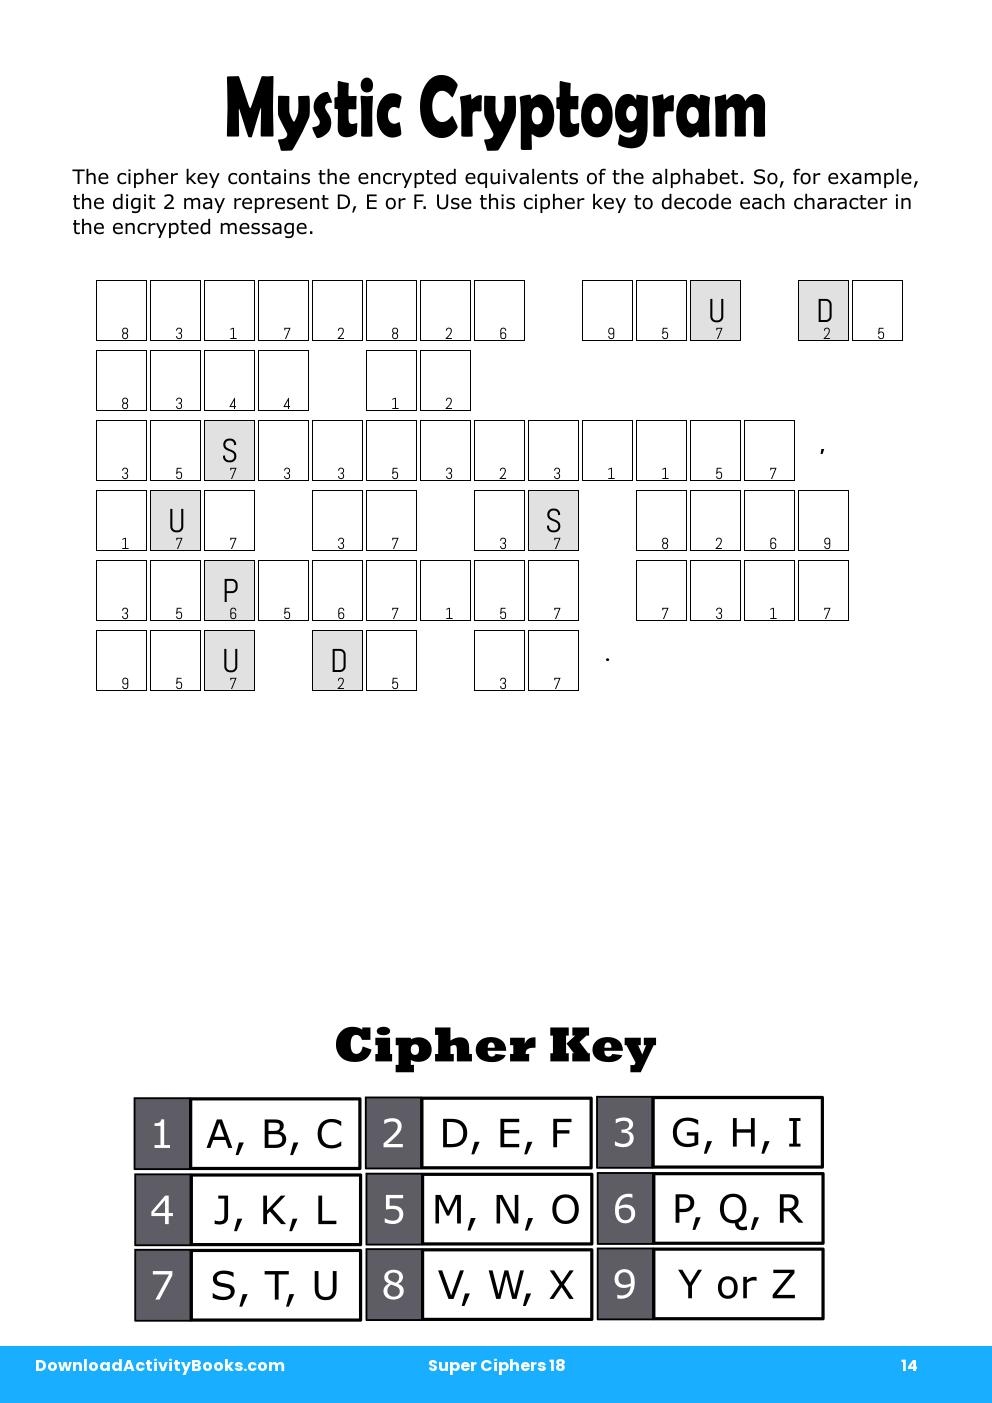 Mystic Cryptogram in Super Ciphers 18